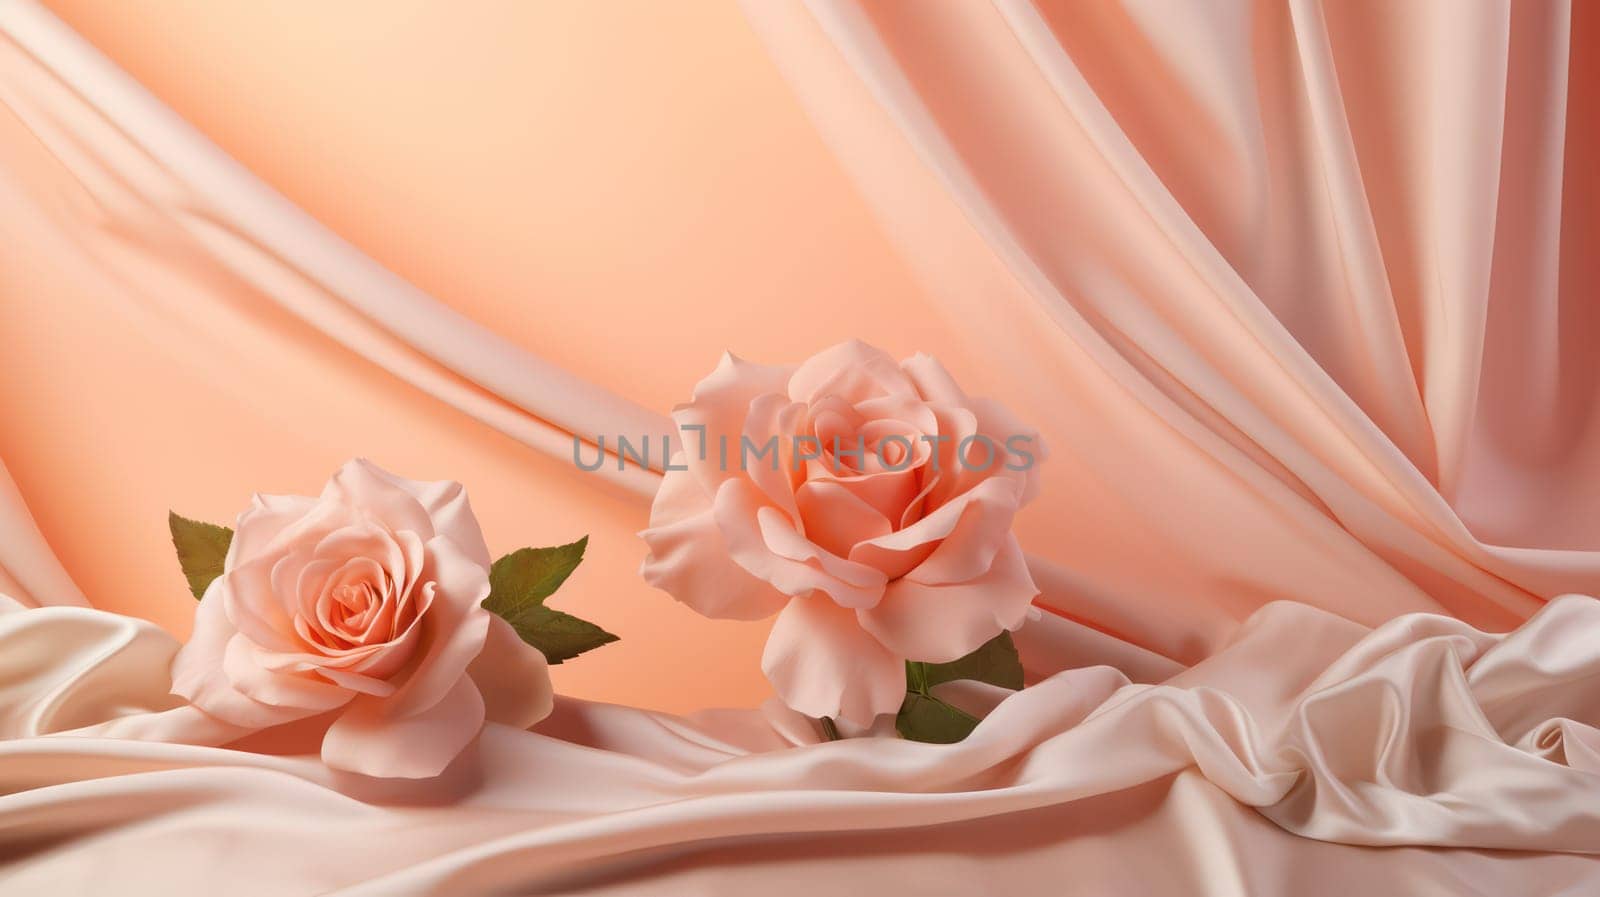 Romantic Pink Blossoms: Elegant White Rose Flowers on Soft Pastel Background